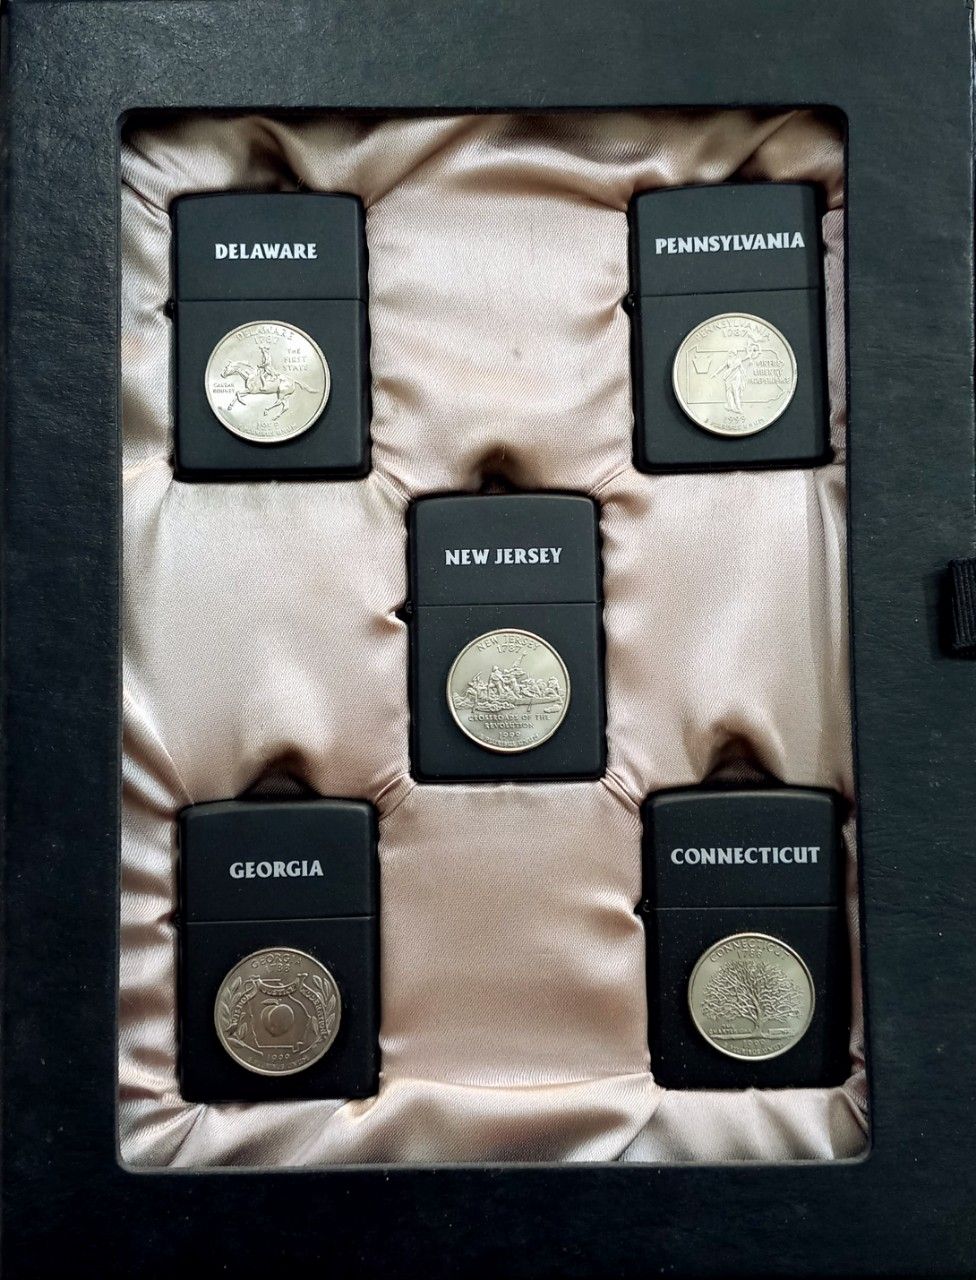 Set Bật Lửa Zippo State Quarters: The zippo Collection Vol 1 Bản Giới Hạn 5.000 Set ZS34